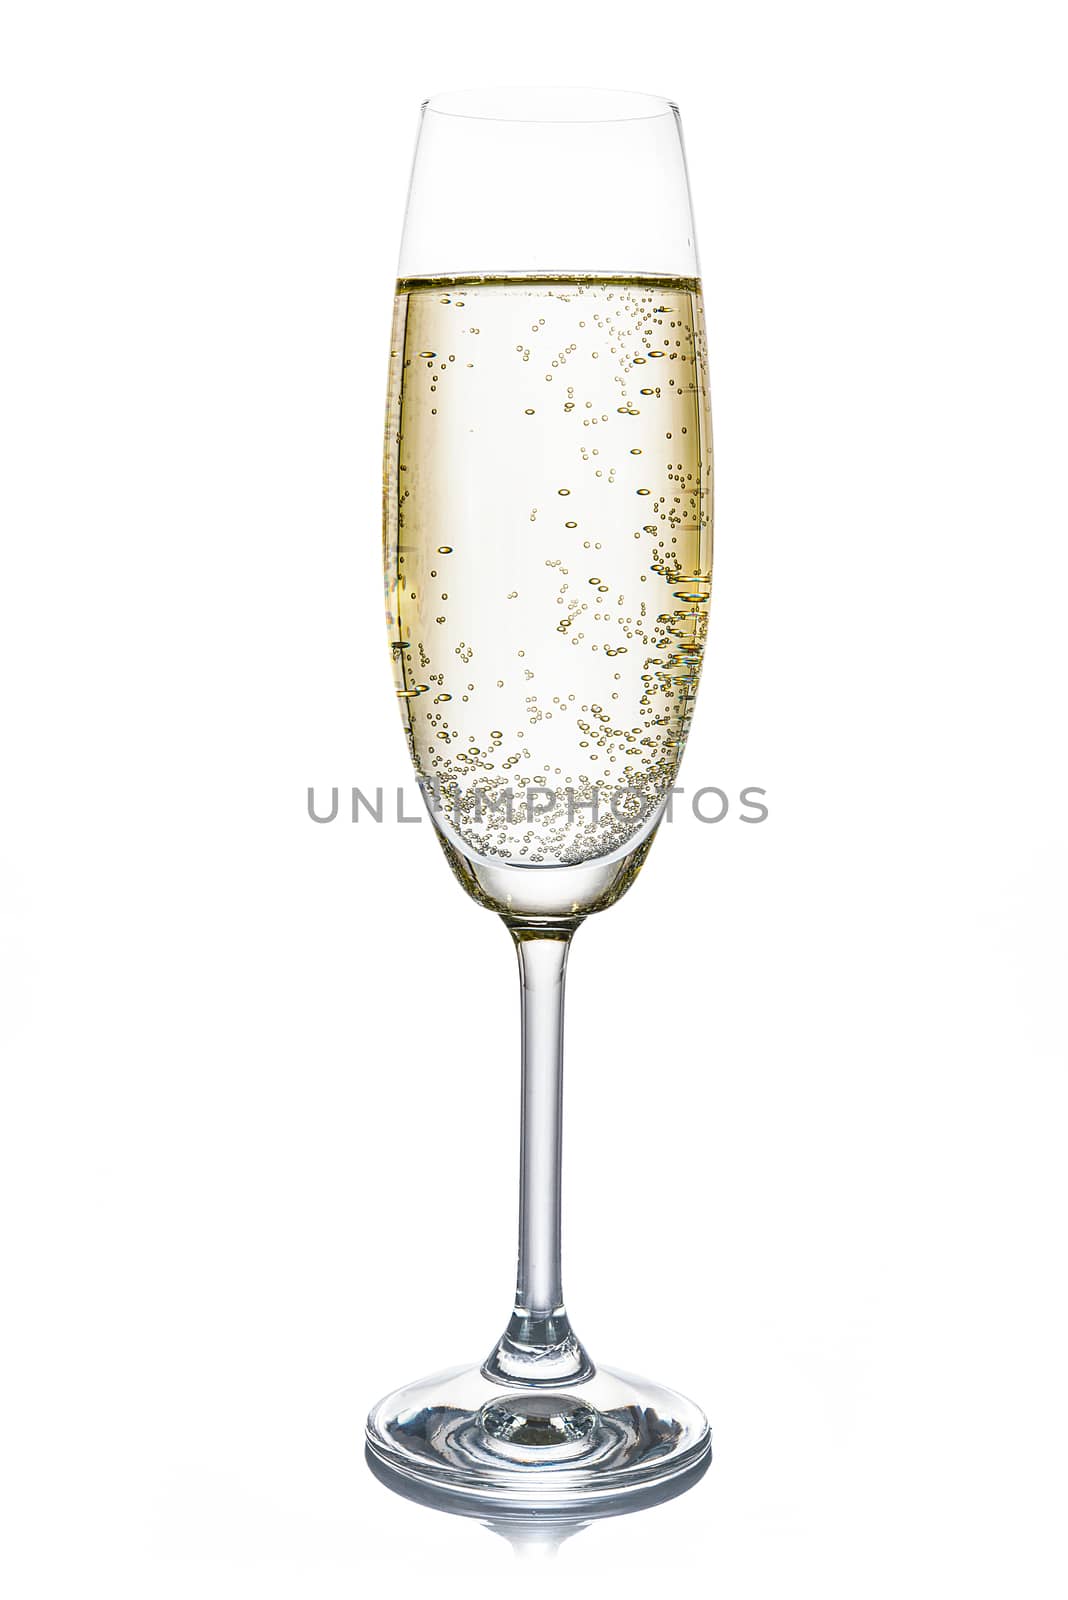 Elegant champagne glass by wdnet_studio